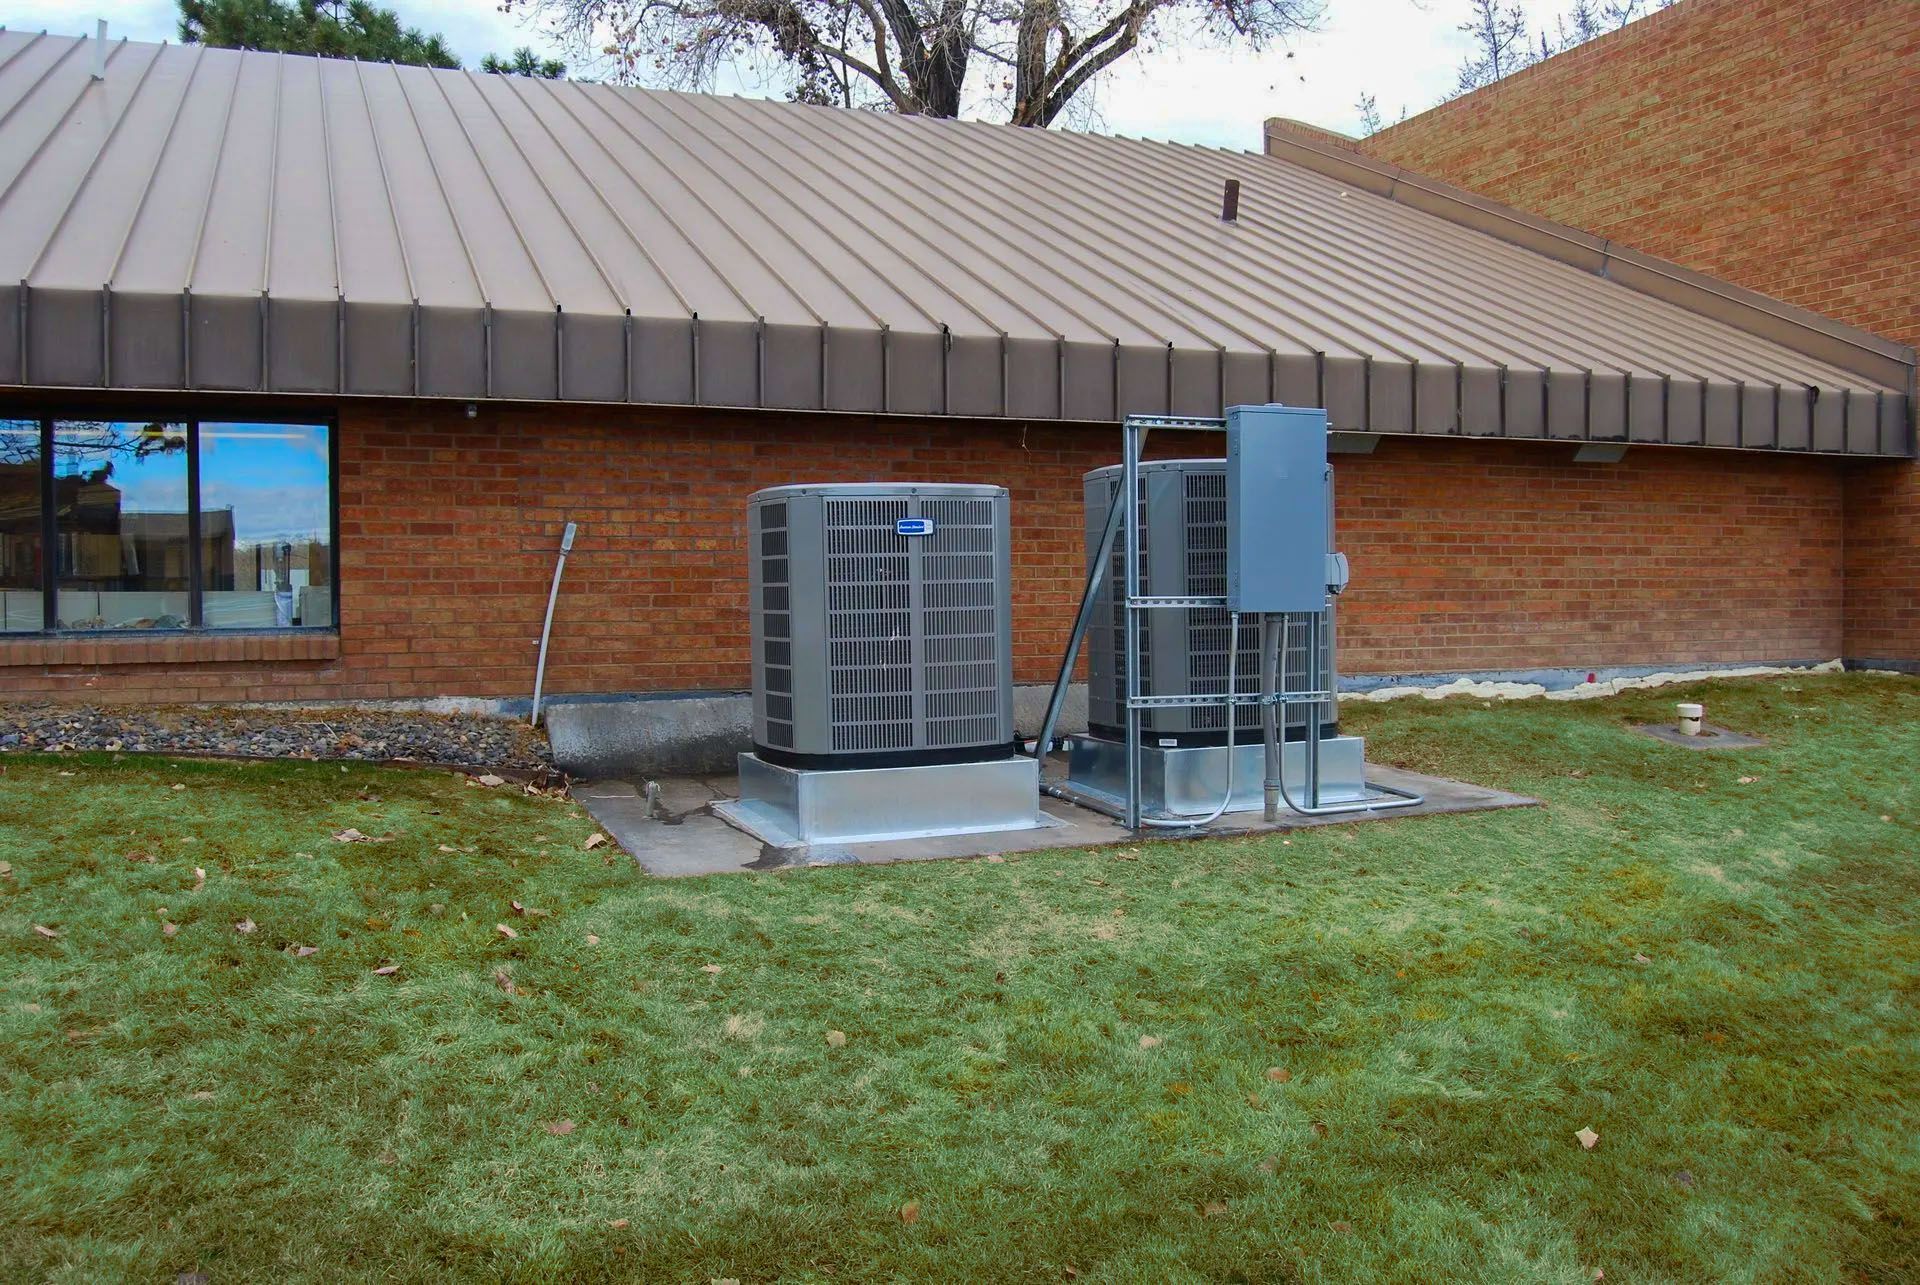 American Standard HVAC system after install